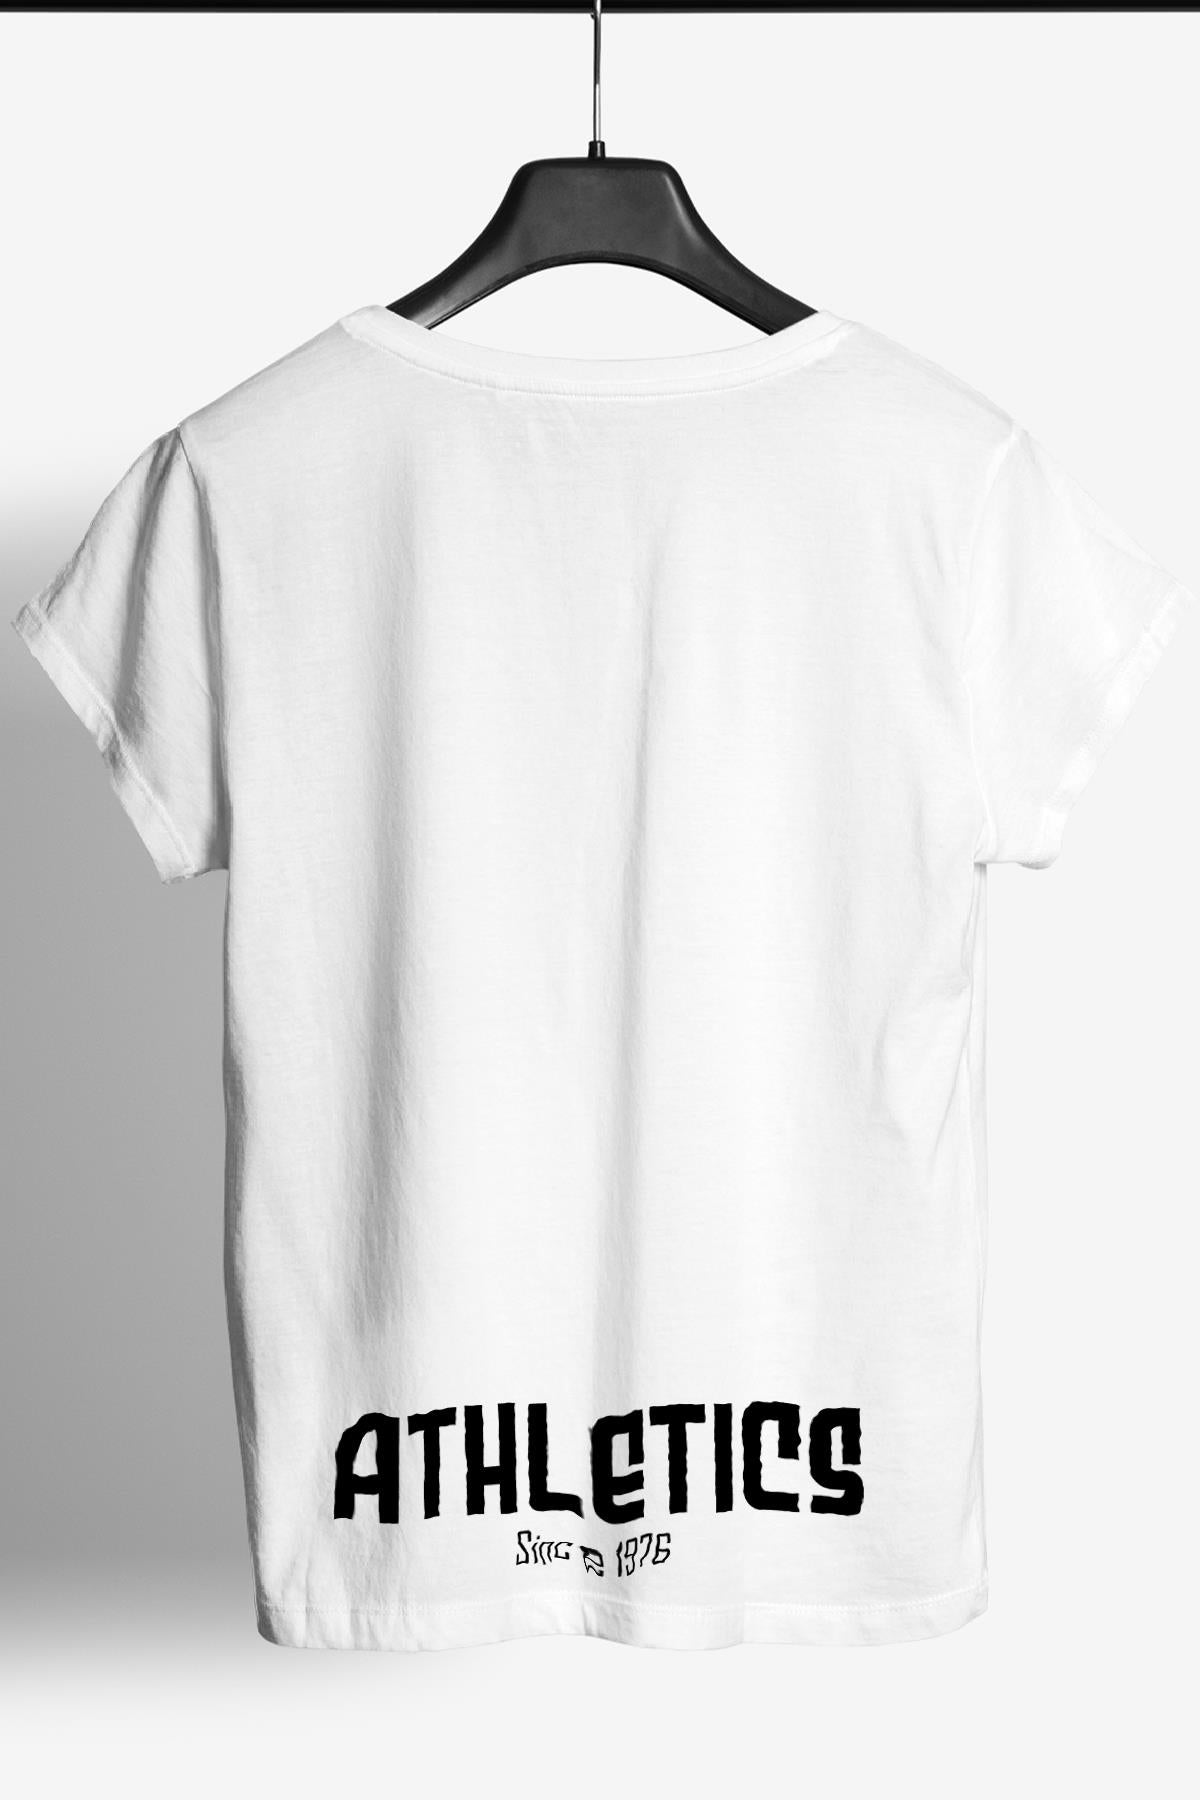 Athletics printed Crew Neck men's t -shirt